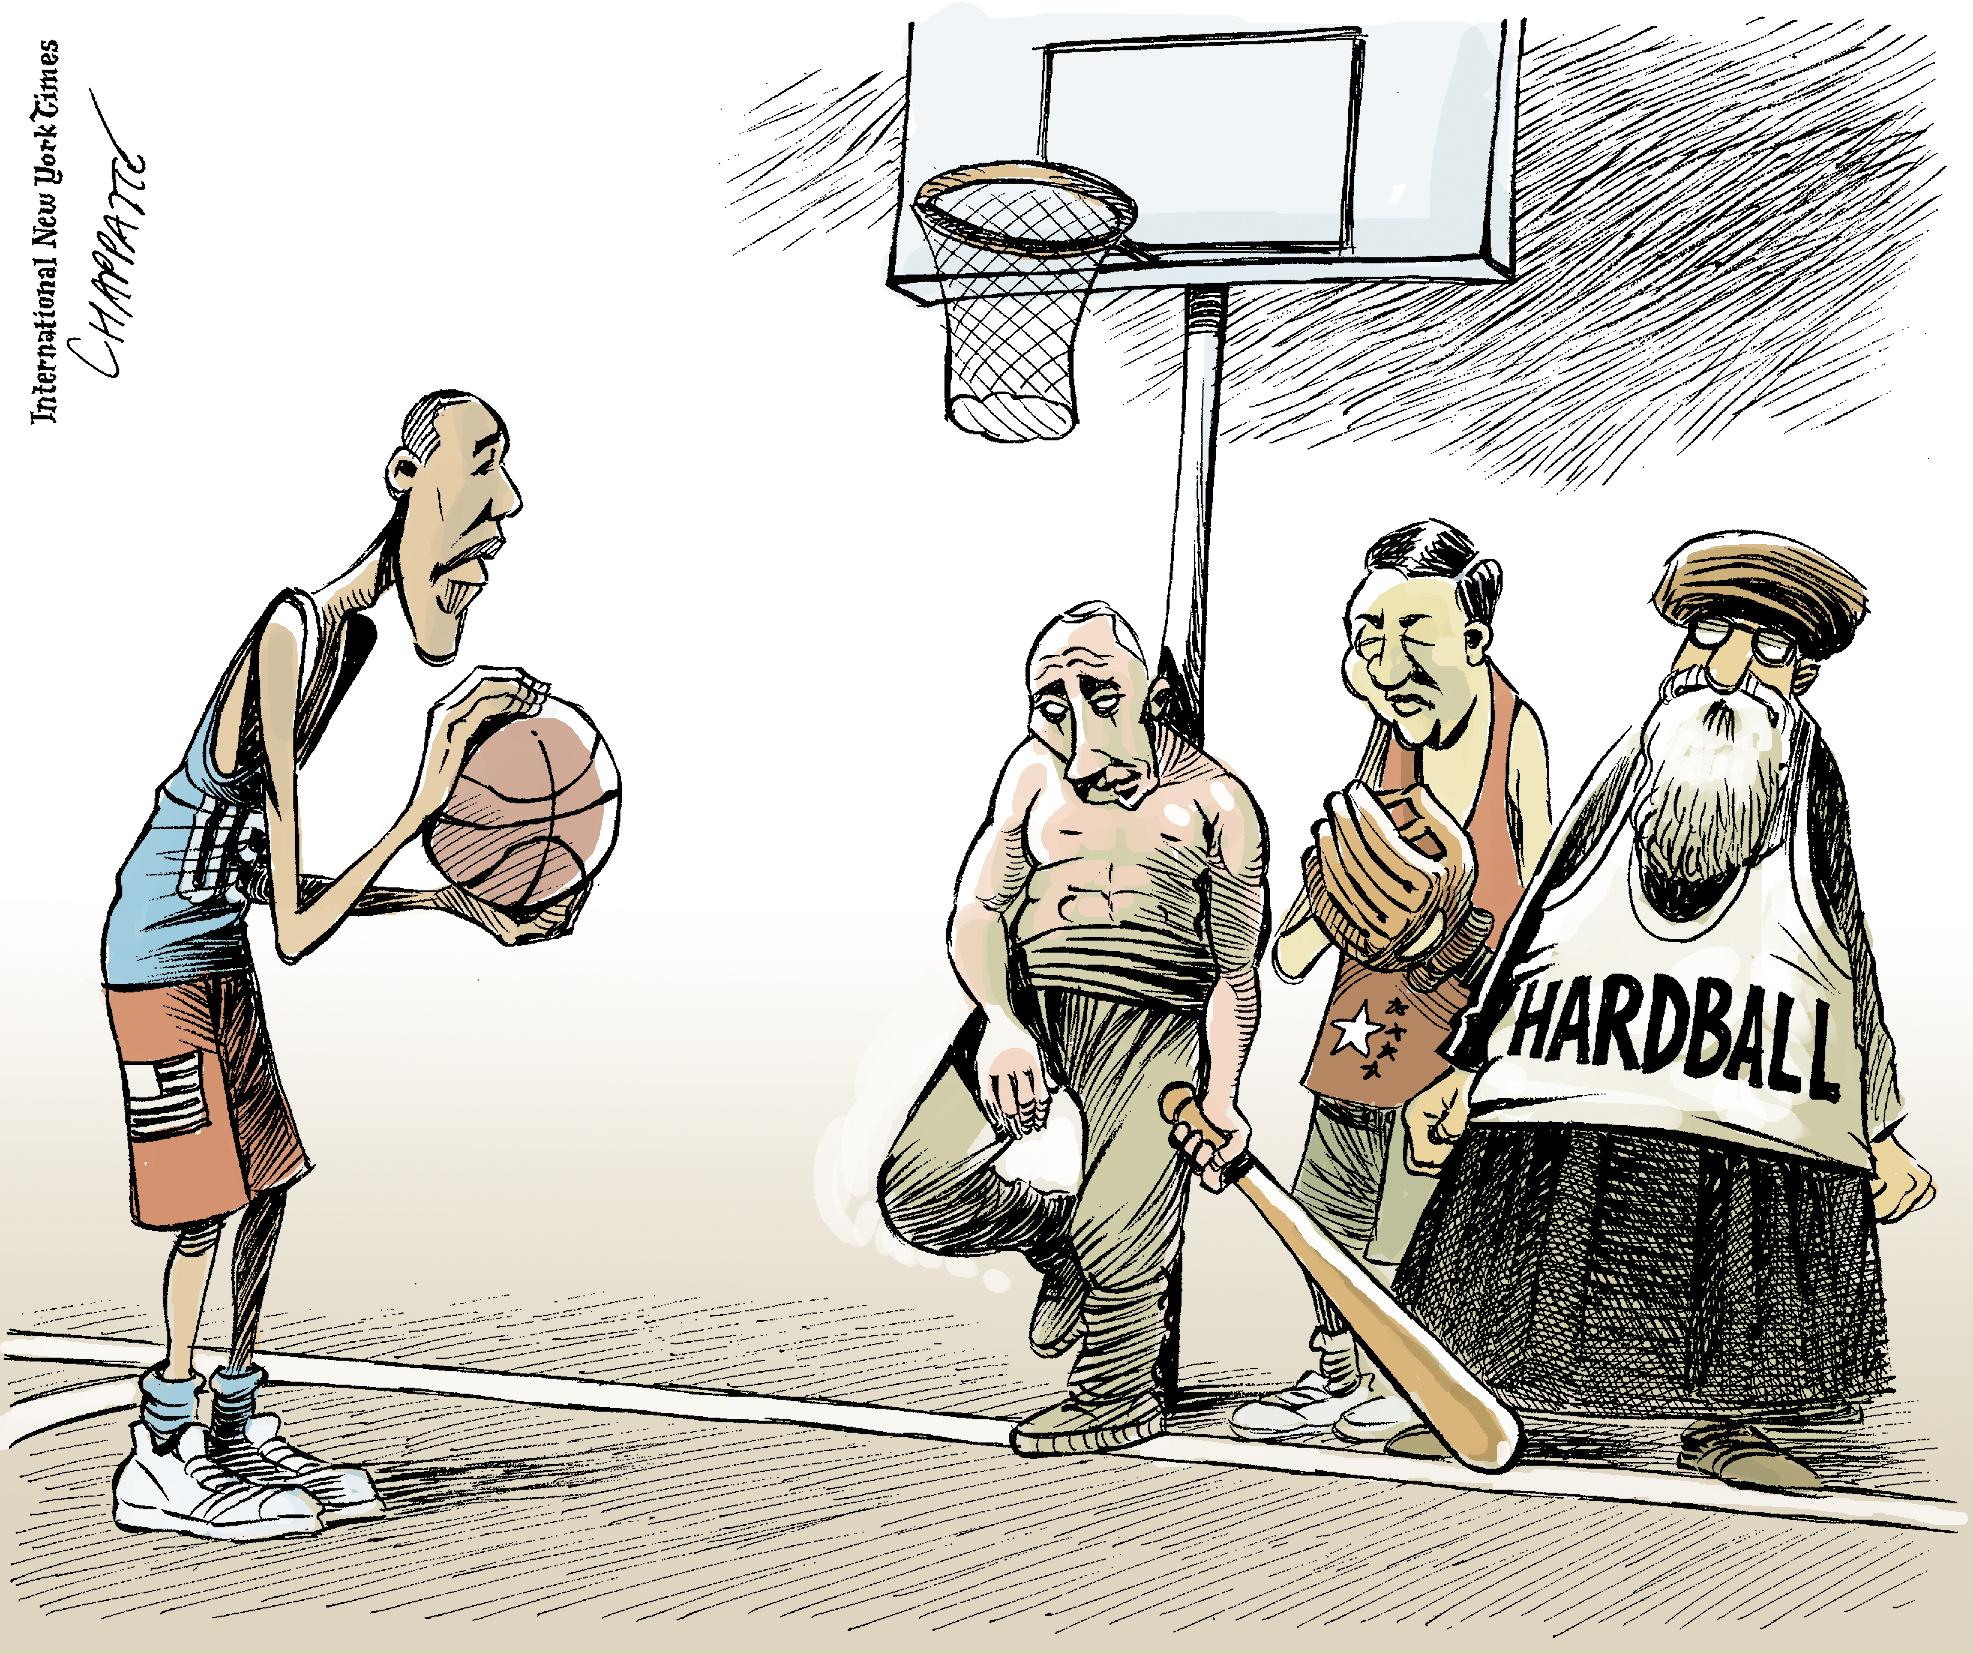 Hardball in World politics